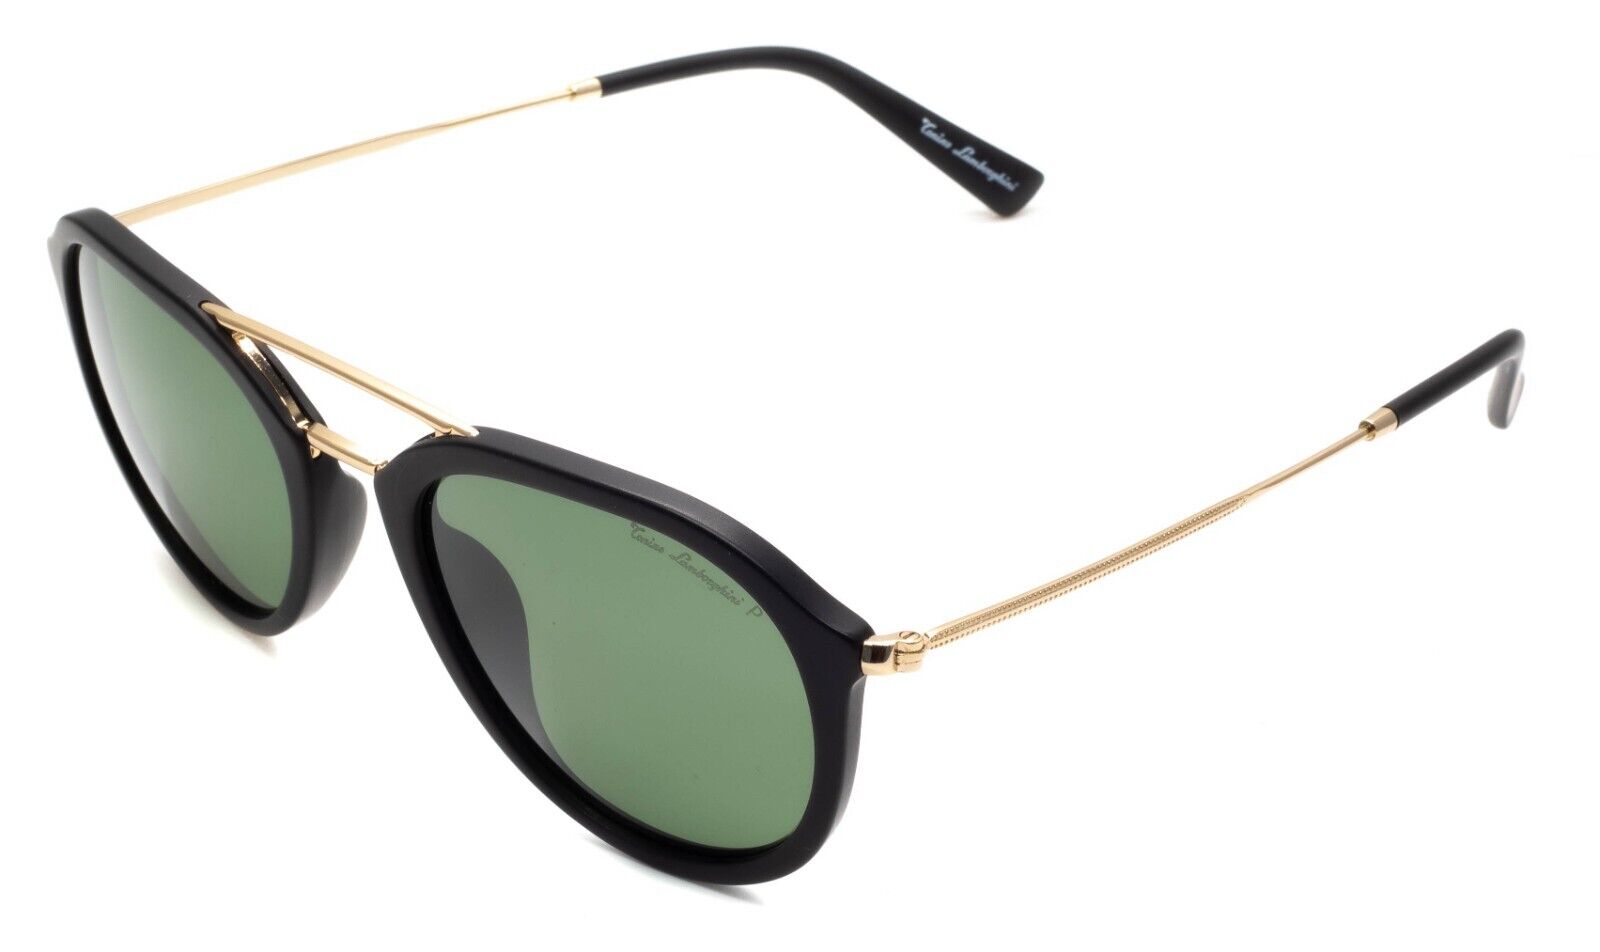 QUIKSILVER DEVILLE EQYEY03043 XSSS 54mm Sunglasses Shades Glasses Eyewear  Italy - GGV Eyewear